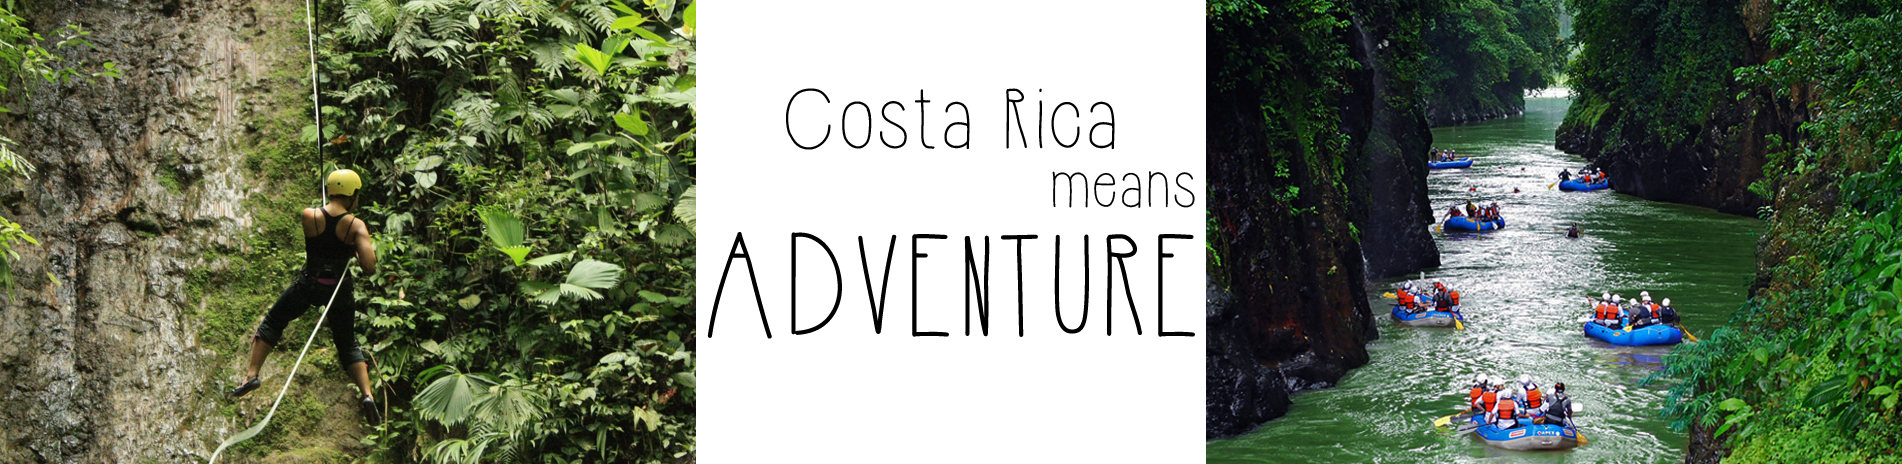 Costa Rica Adventure 1